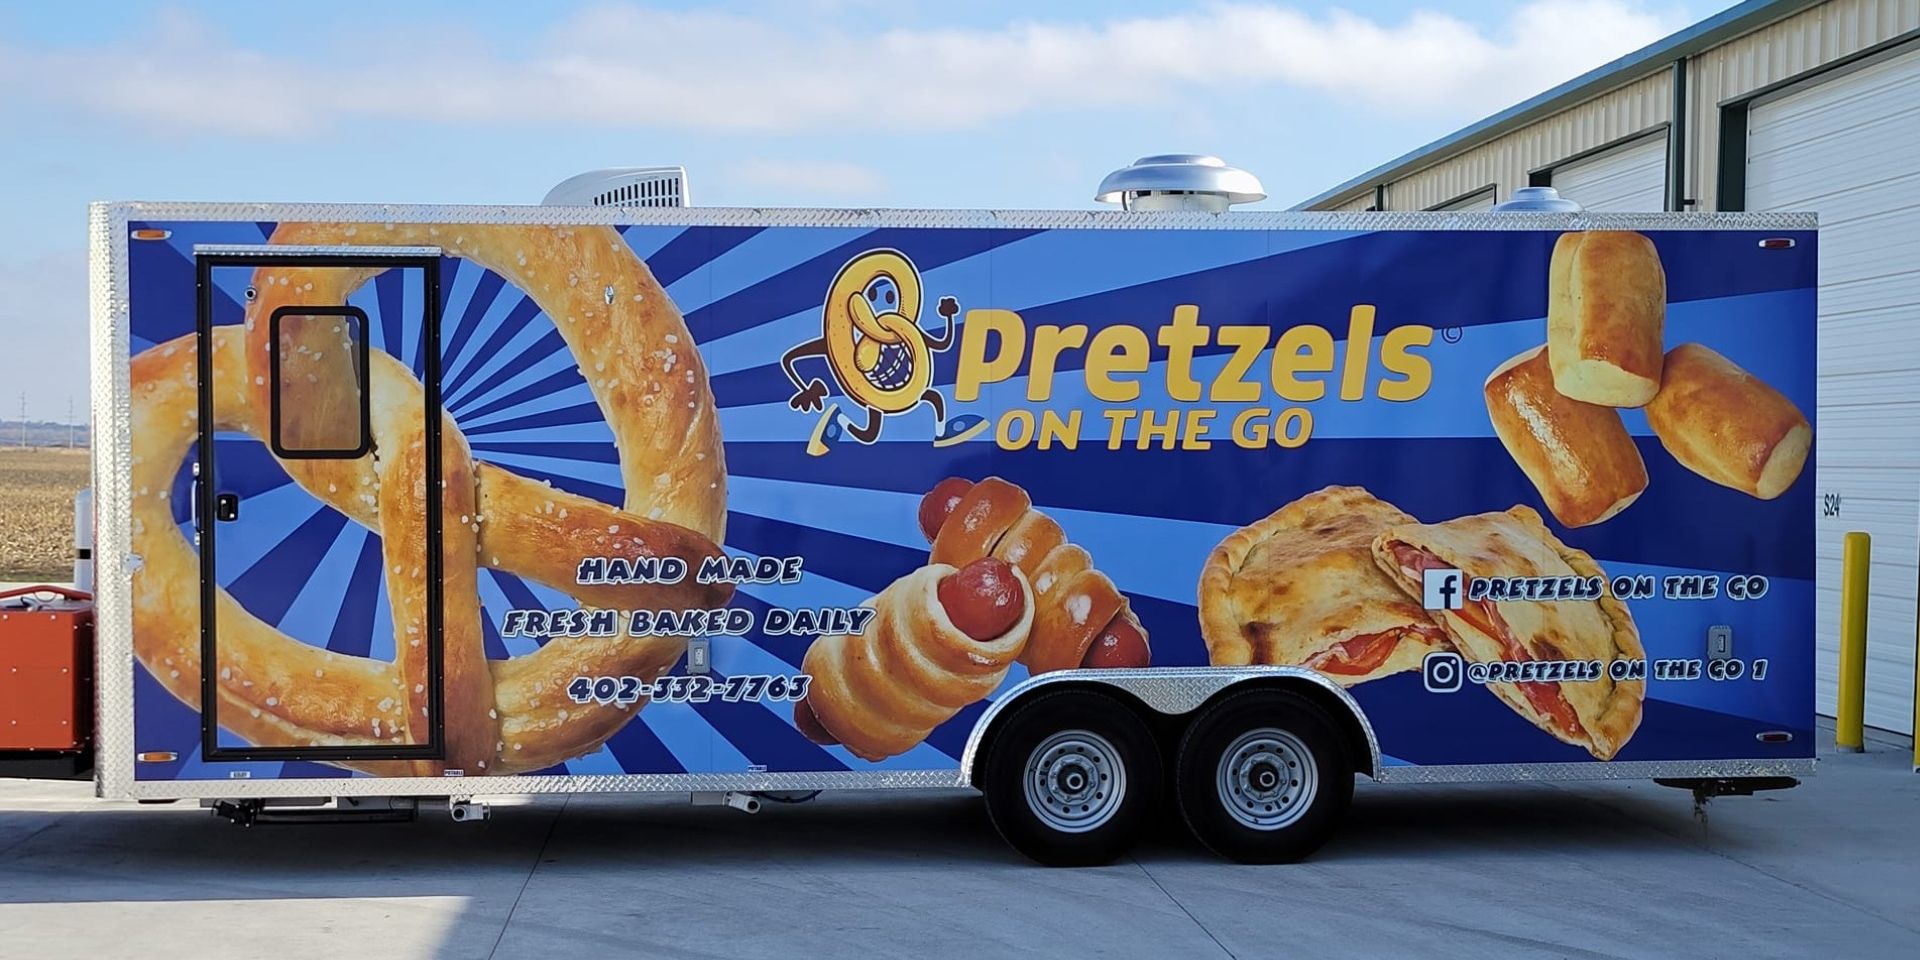 Pretzels on the Go! Food Truck promotional image